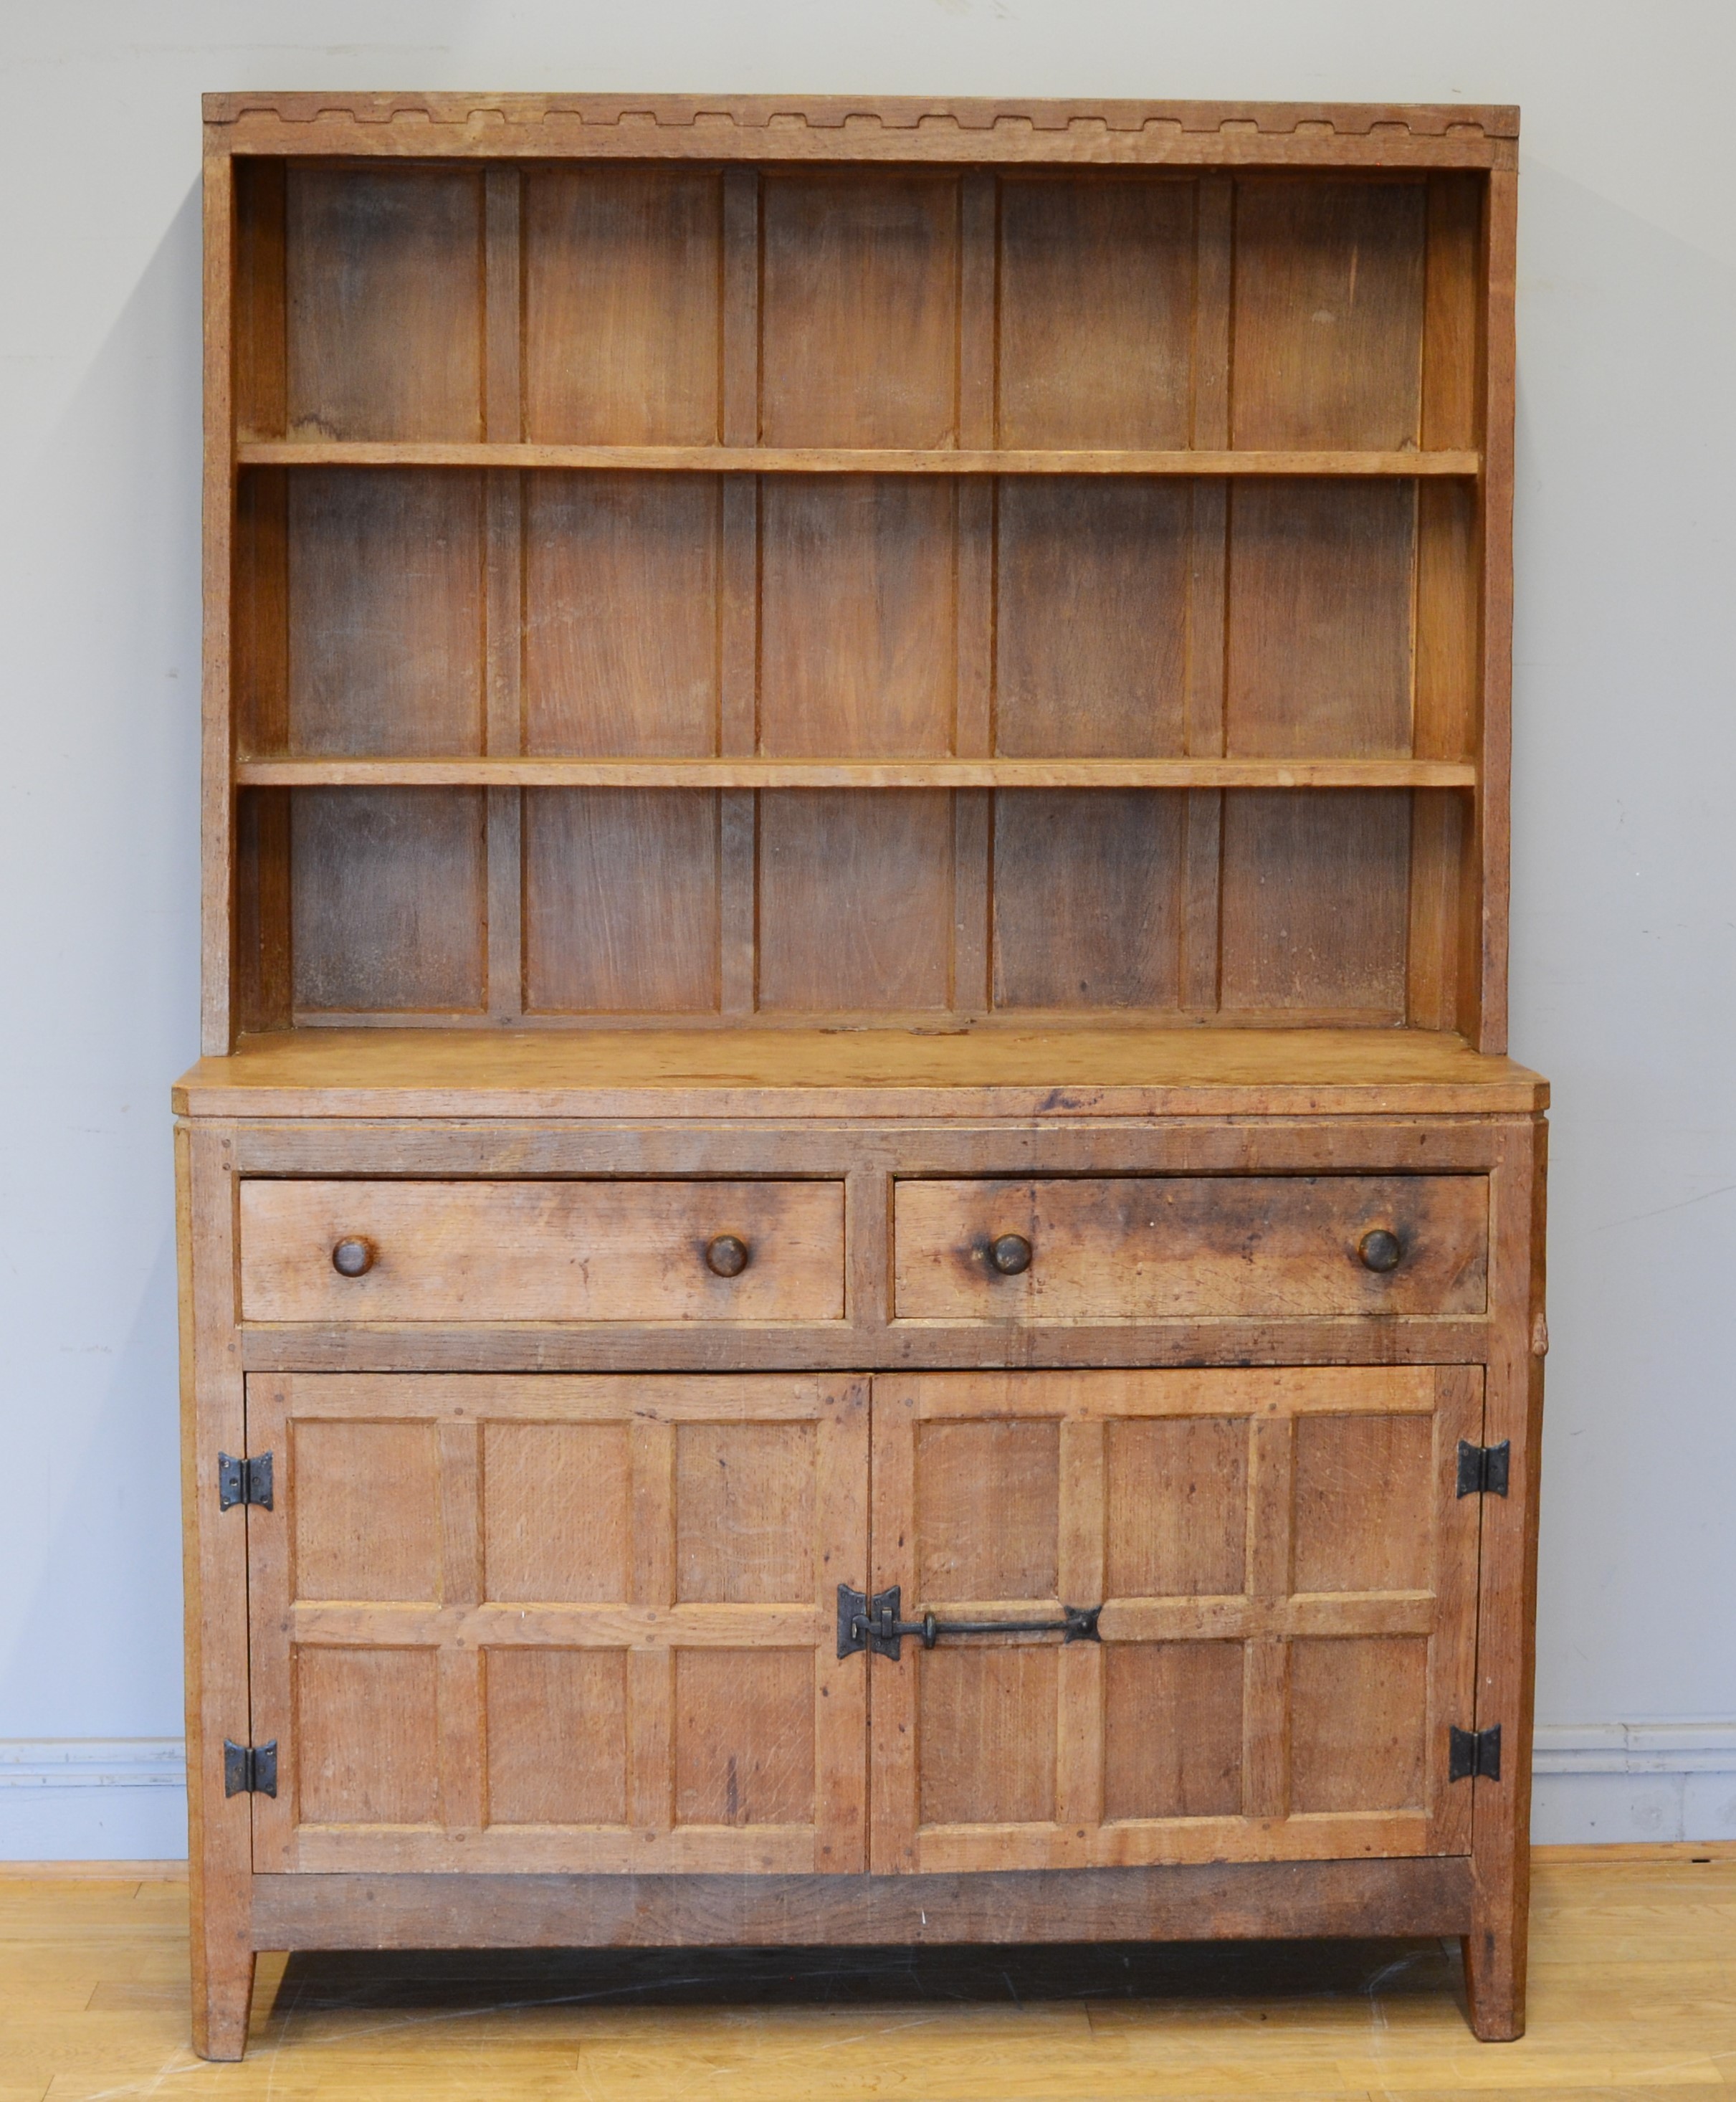 Peter 'Rabbitman' Heap, a mid 20th century adzed oak Welsh style dresser, the panelled upper section